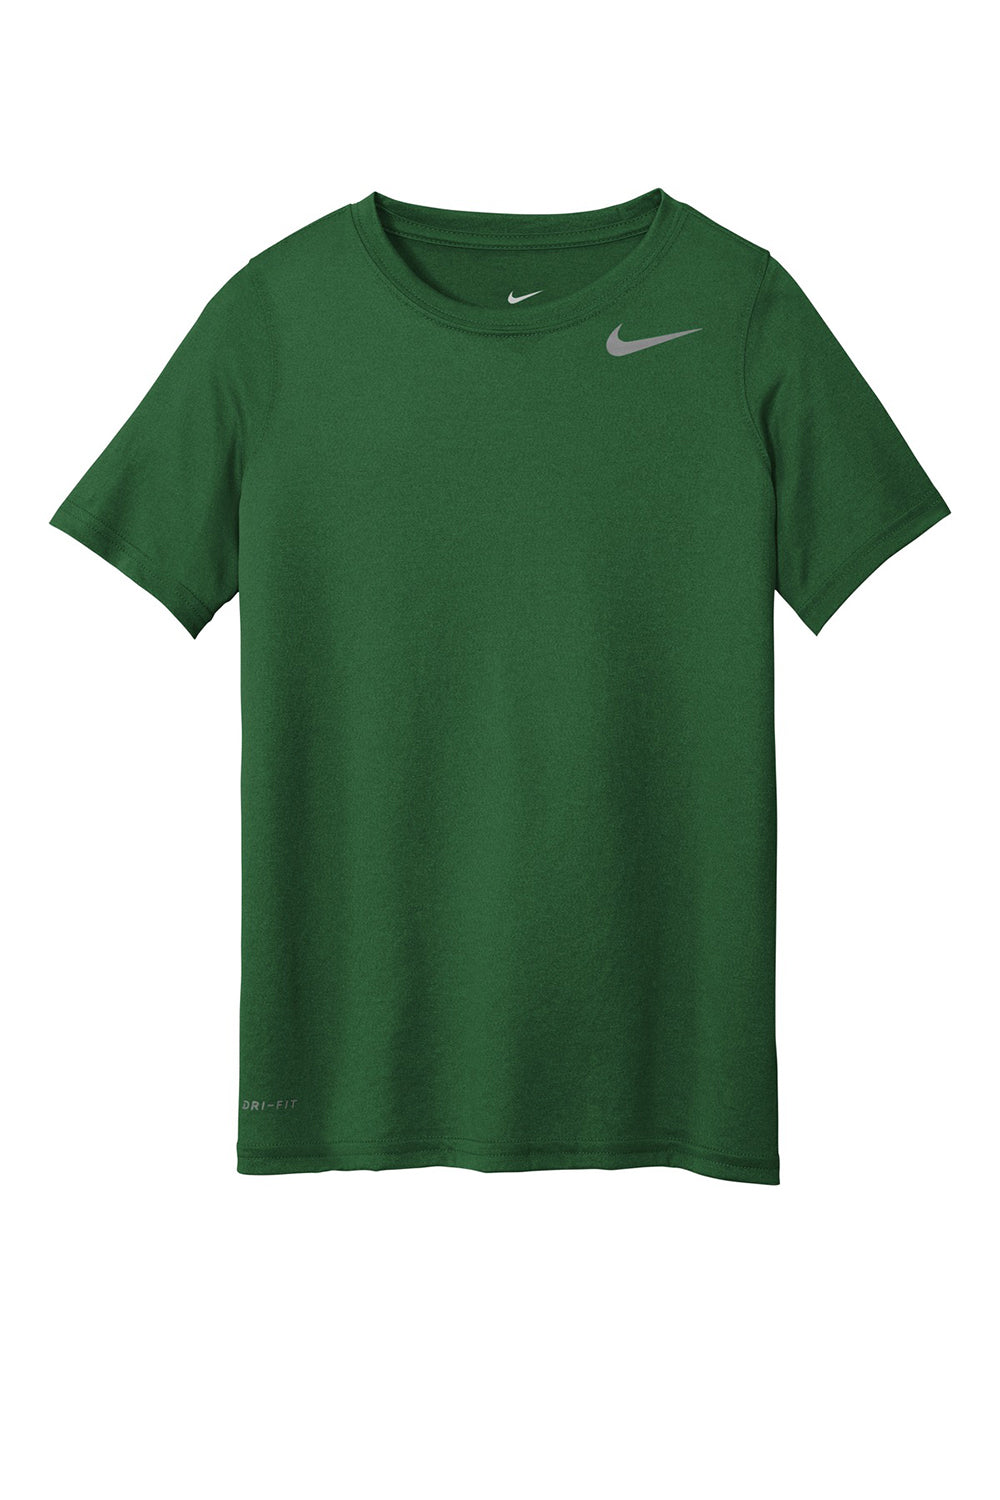 Nike 840178 Youth Legend Dri-Fit Moisture Wicking Short Sleeve Crewneck T-Shirt Gorge Green Flat Front